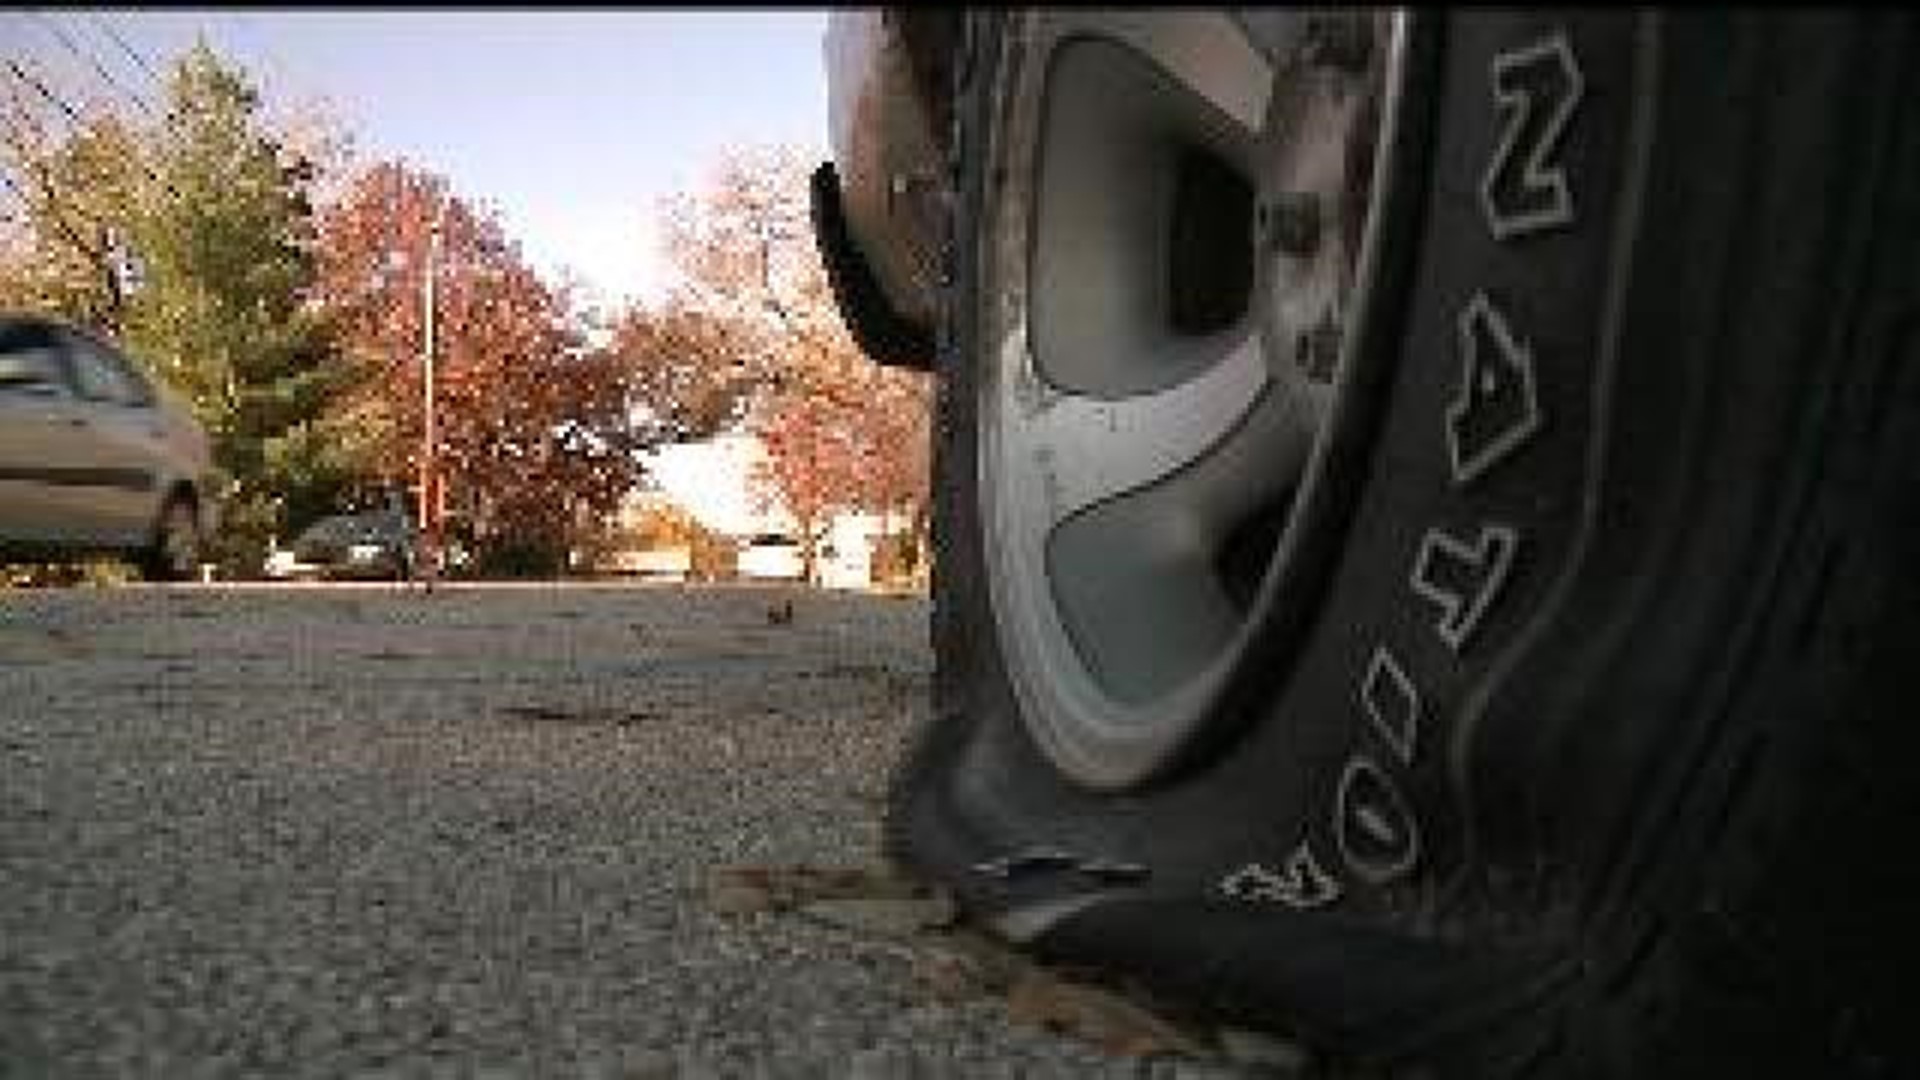 Vehicles vandalized in Davenport neighborhood